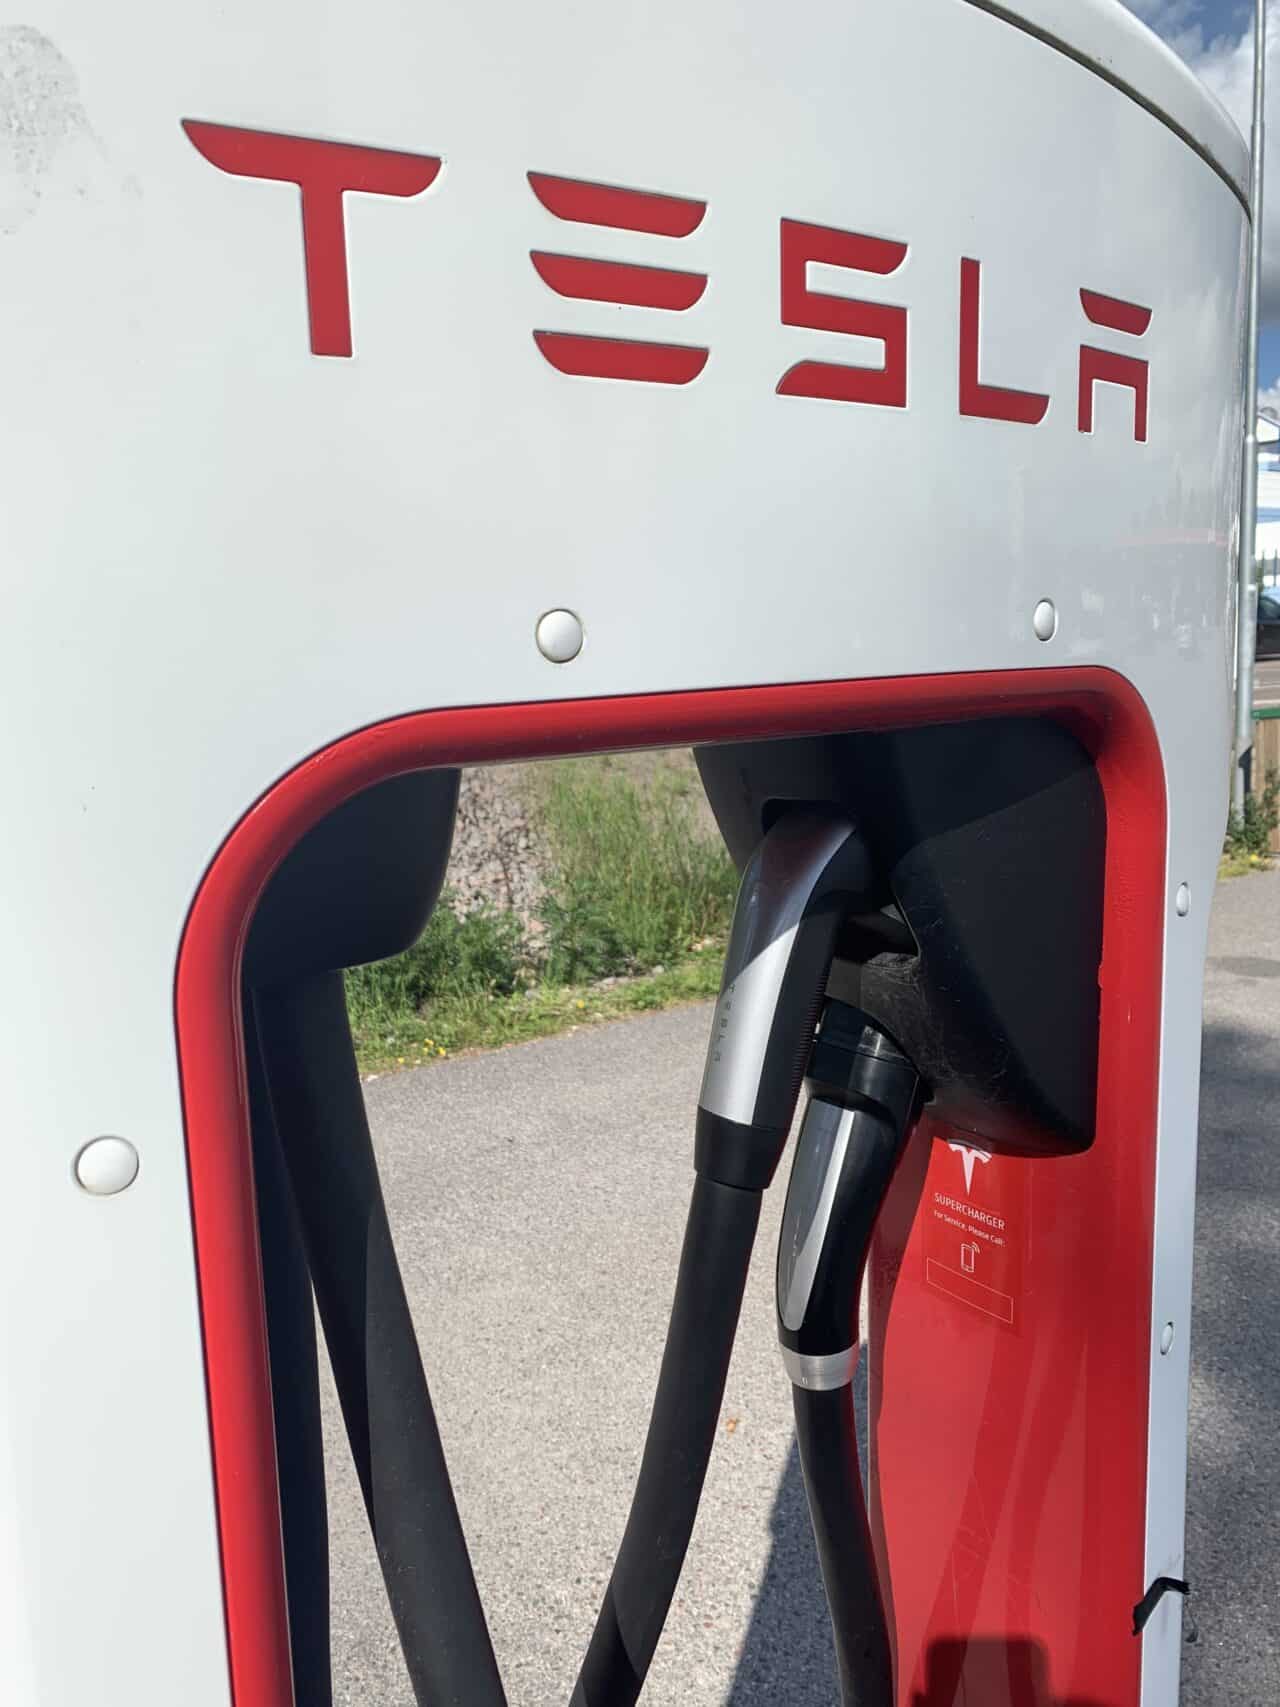 Tesla Supercharger Charger Unit Cables And Connectors